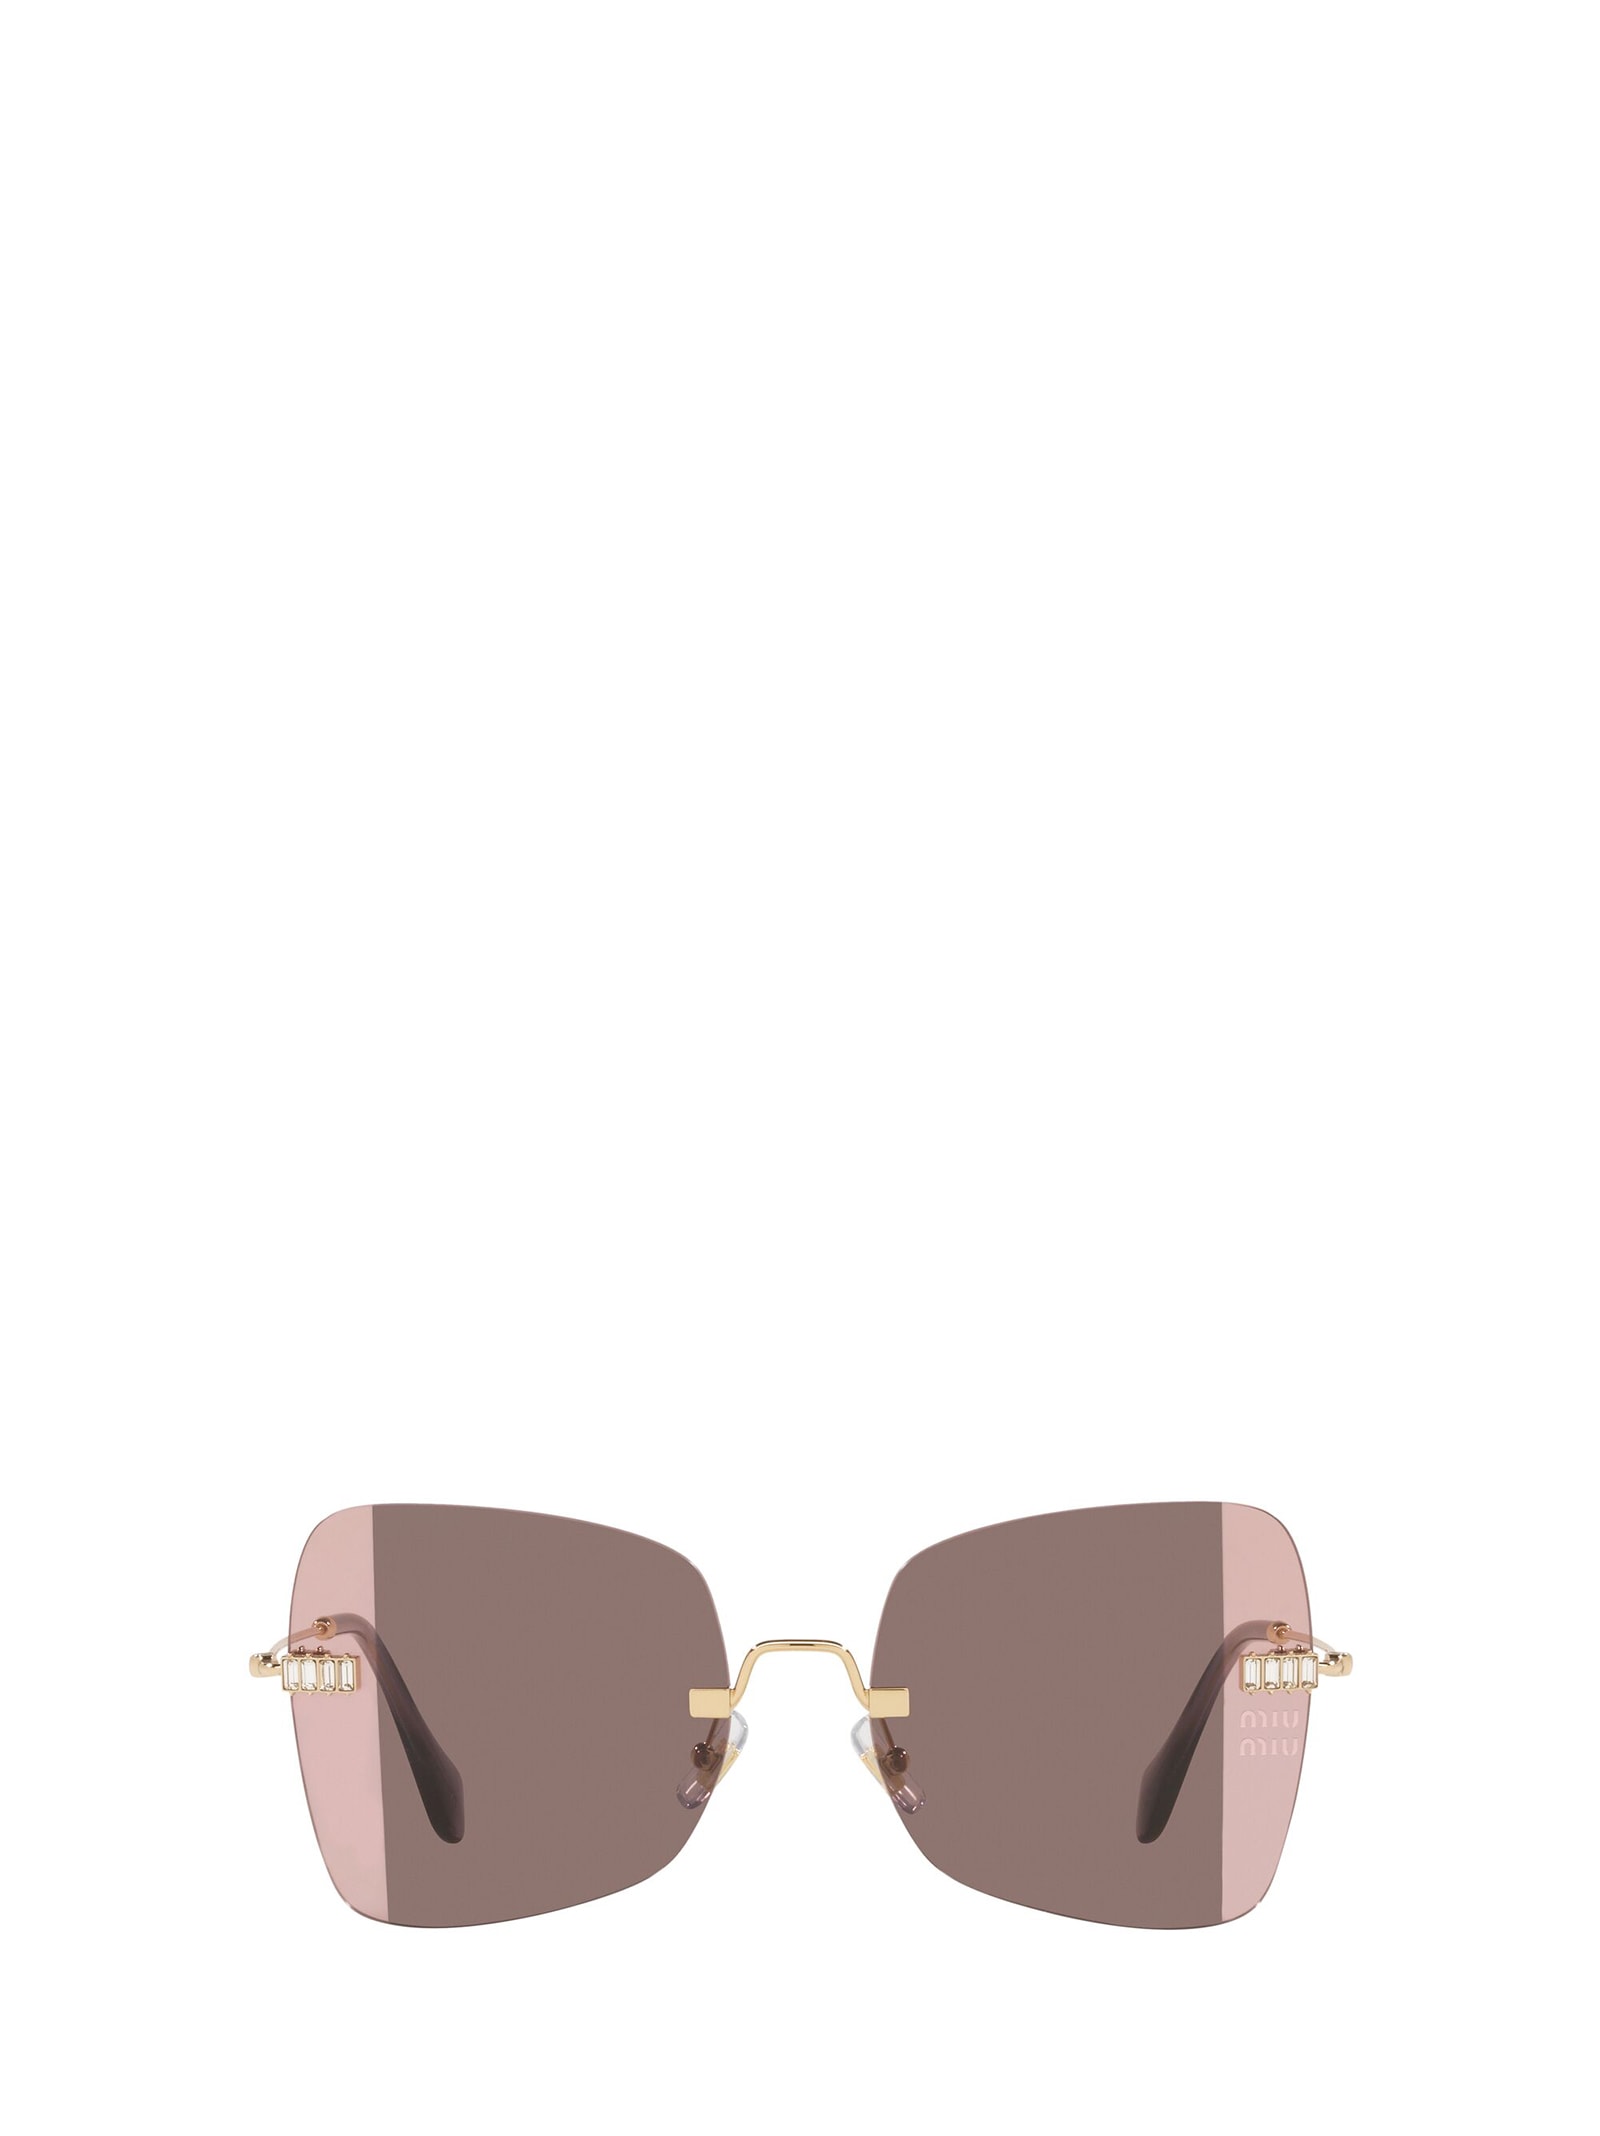 Miu Miu Eyewear Miu Miu Mu 50ws Pale Gold Sunglasses